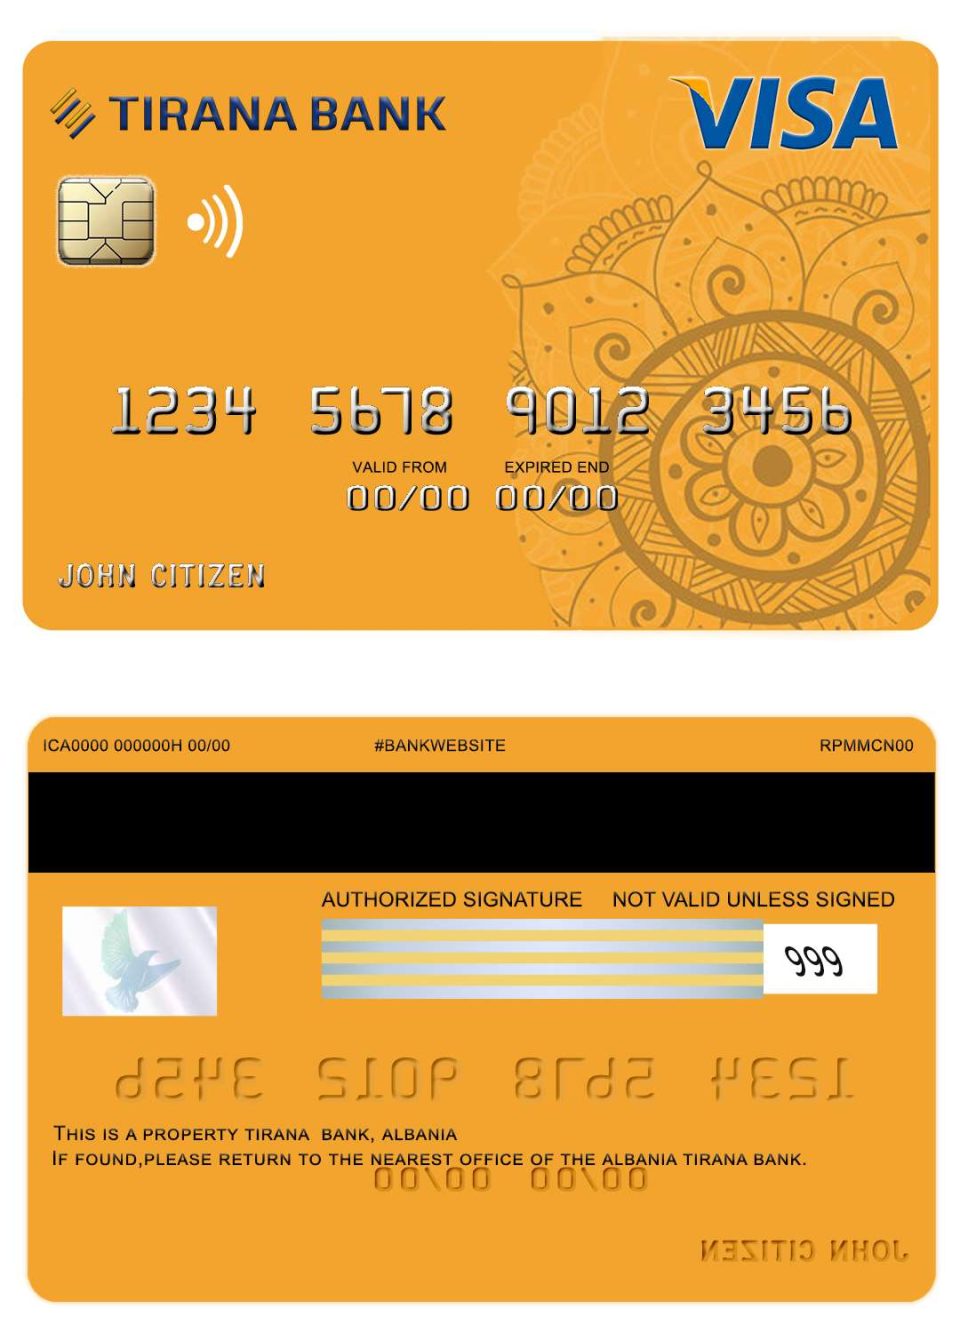 Fillable Albania Tirana bank visa card Templates | Layer-Based PSD